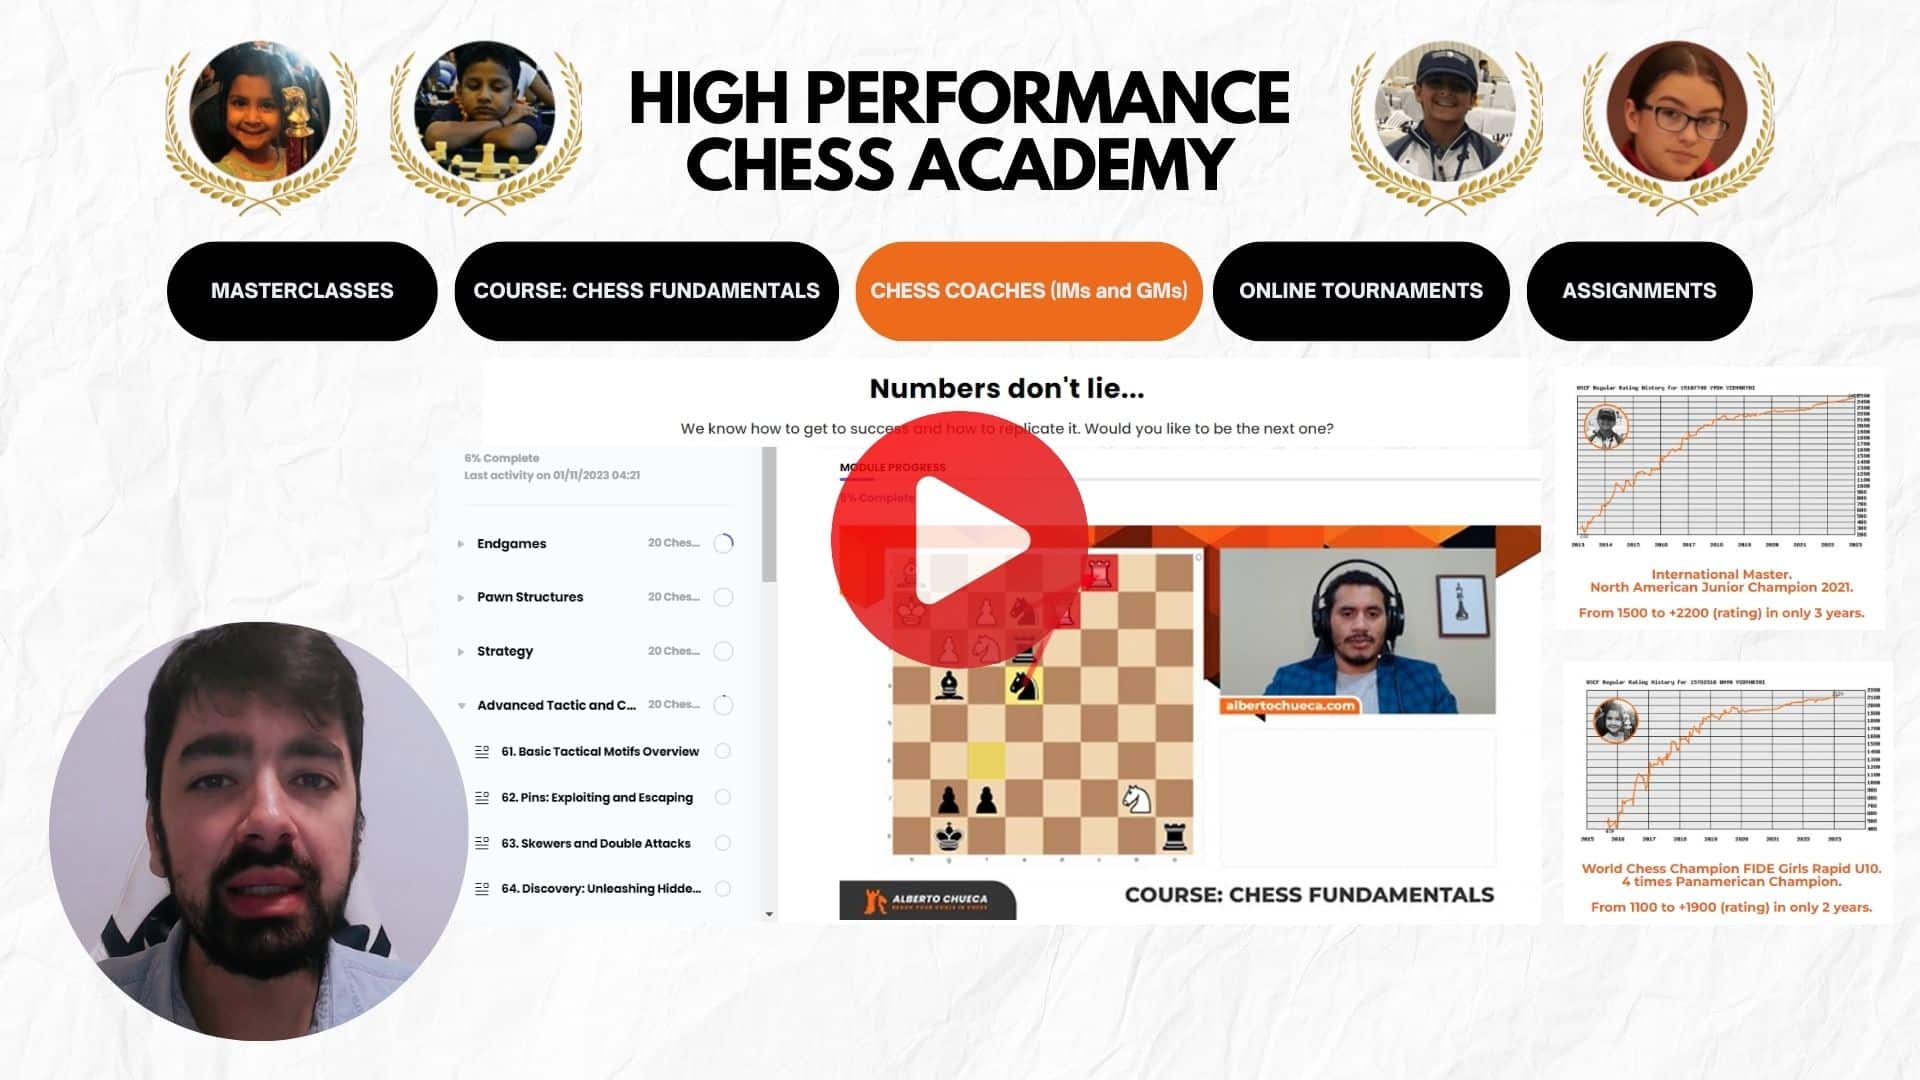 Be A Powerful WFM Chess - Alberto Chueca - High Performance Chess Academy